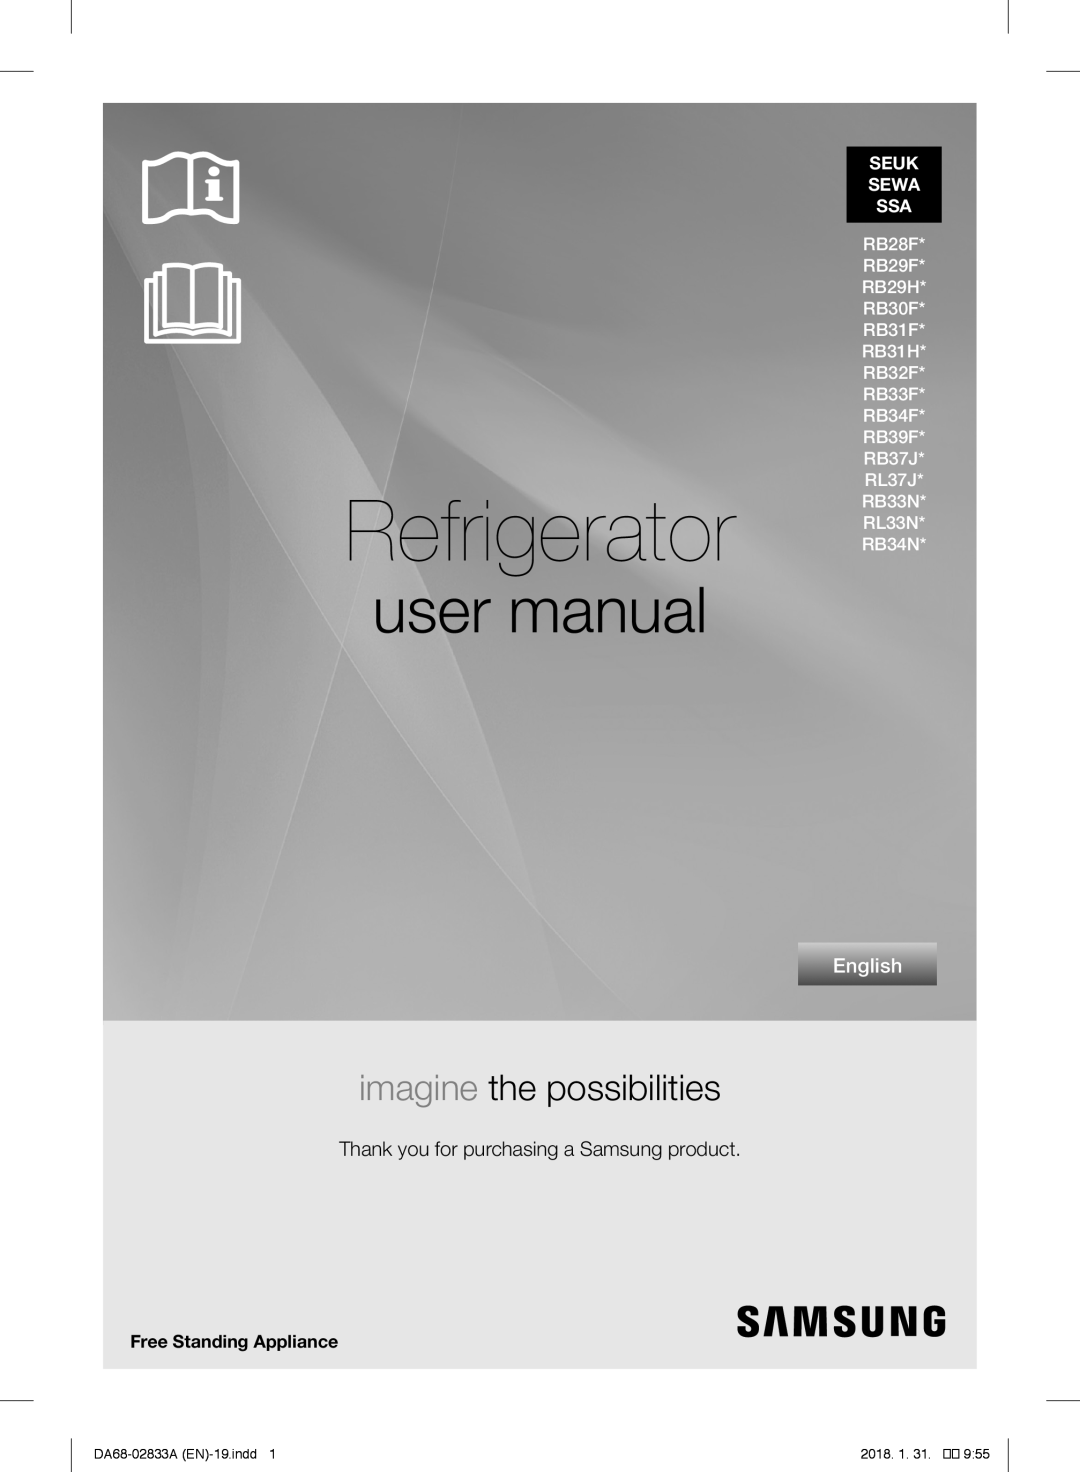 Samsung RL29FEJNBSS/EG manual Refrigerator, user manual, imagine the possibilities, English, Seuk Sewa Ssa, 2018. 1 